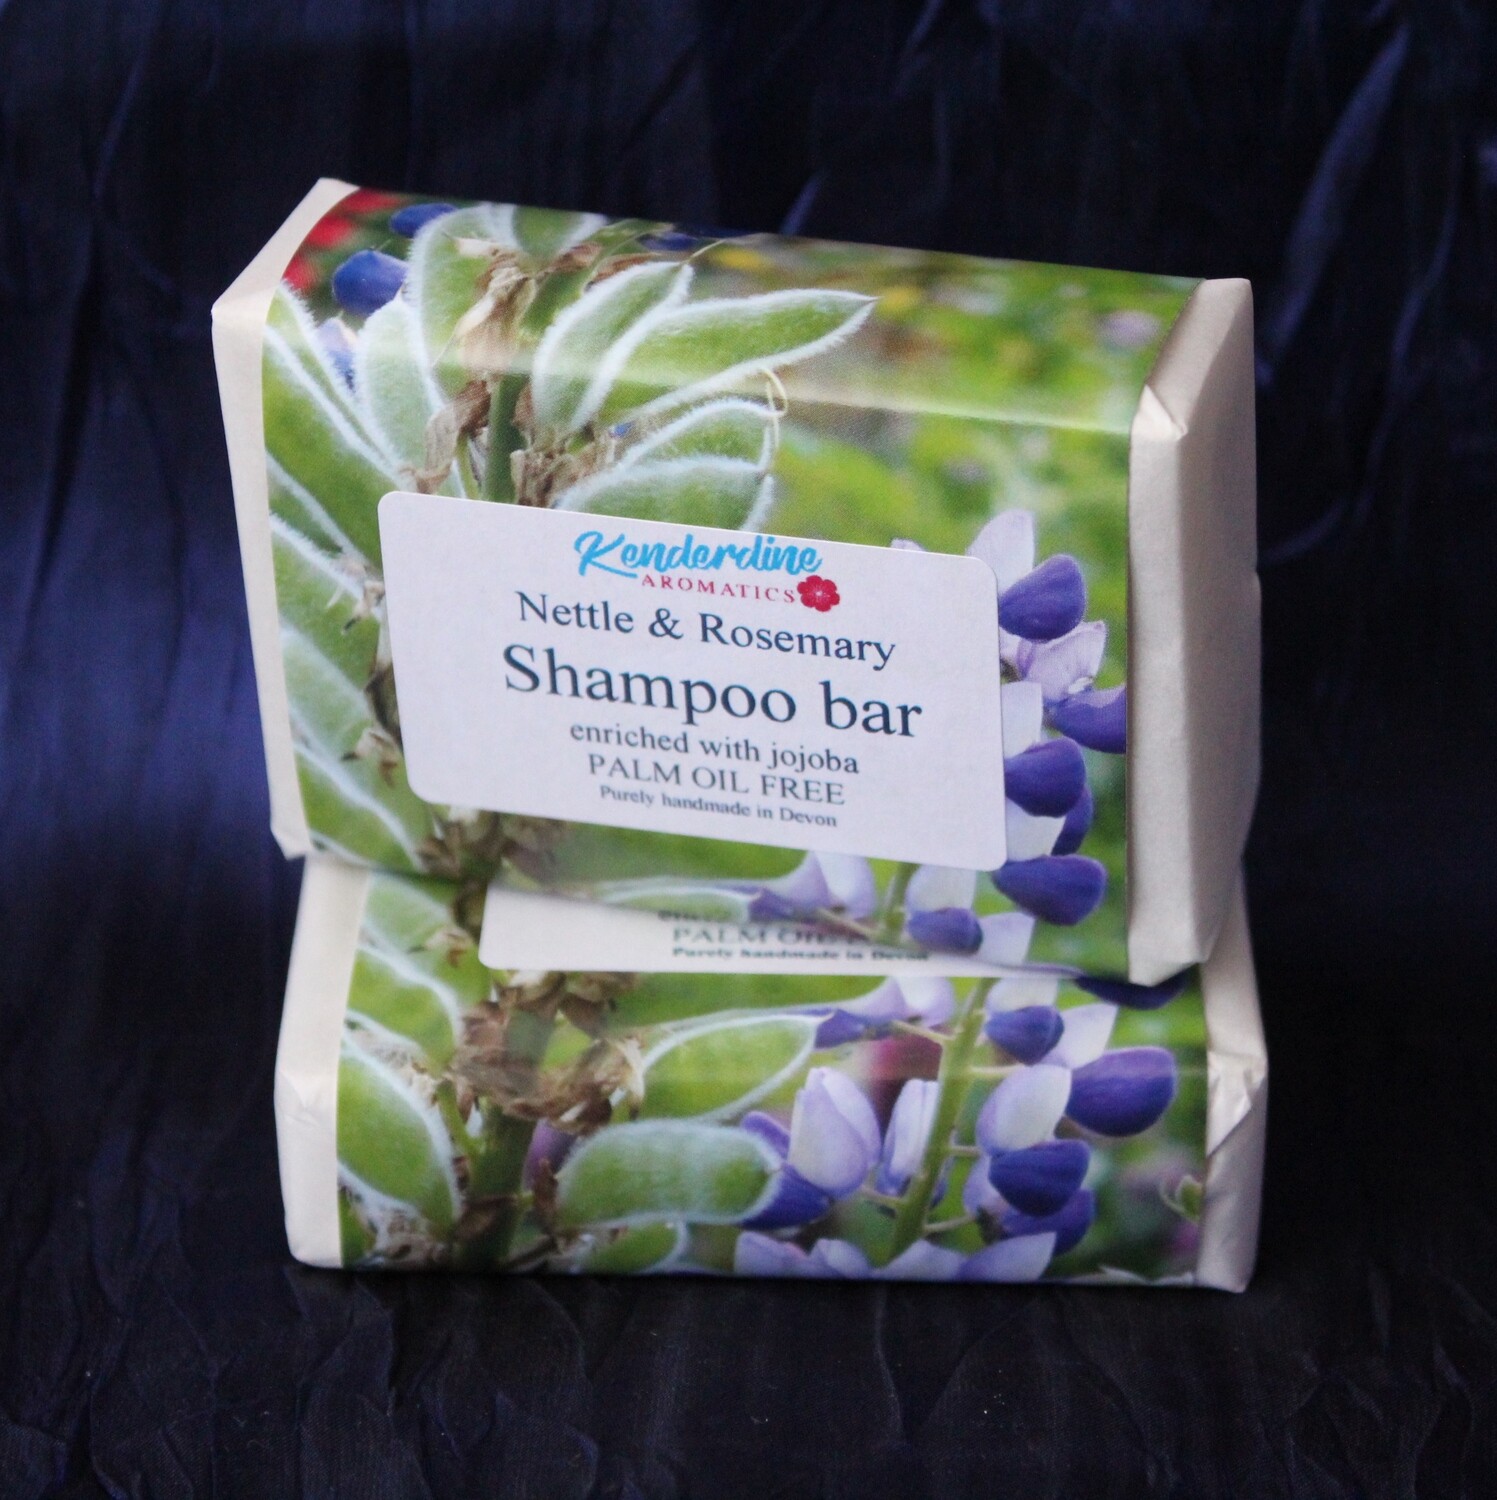 Shampoo bar - nettle and rosemary